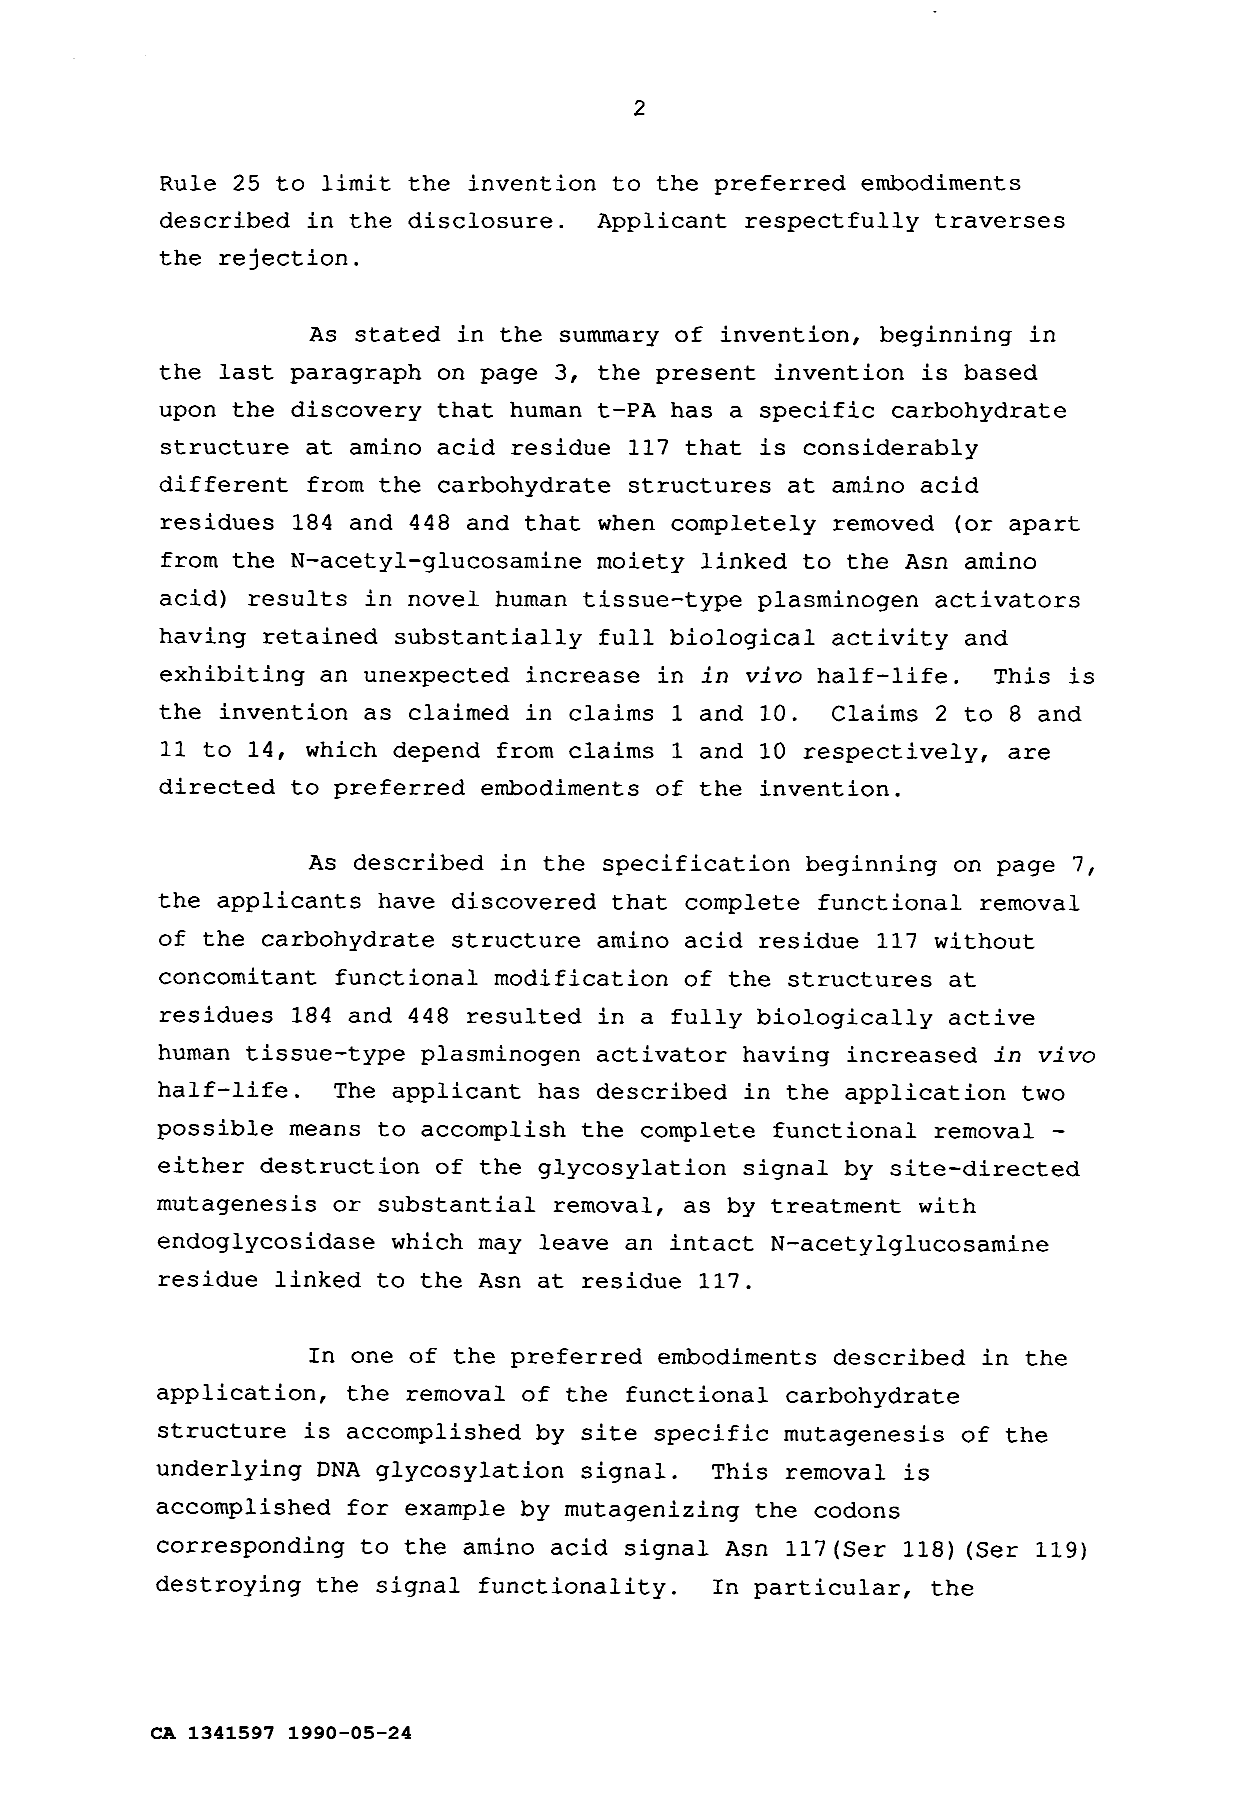 Canadian Patent Document 1341597. Prosecution Correspondence 19900524. Image 2 of 11